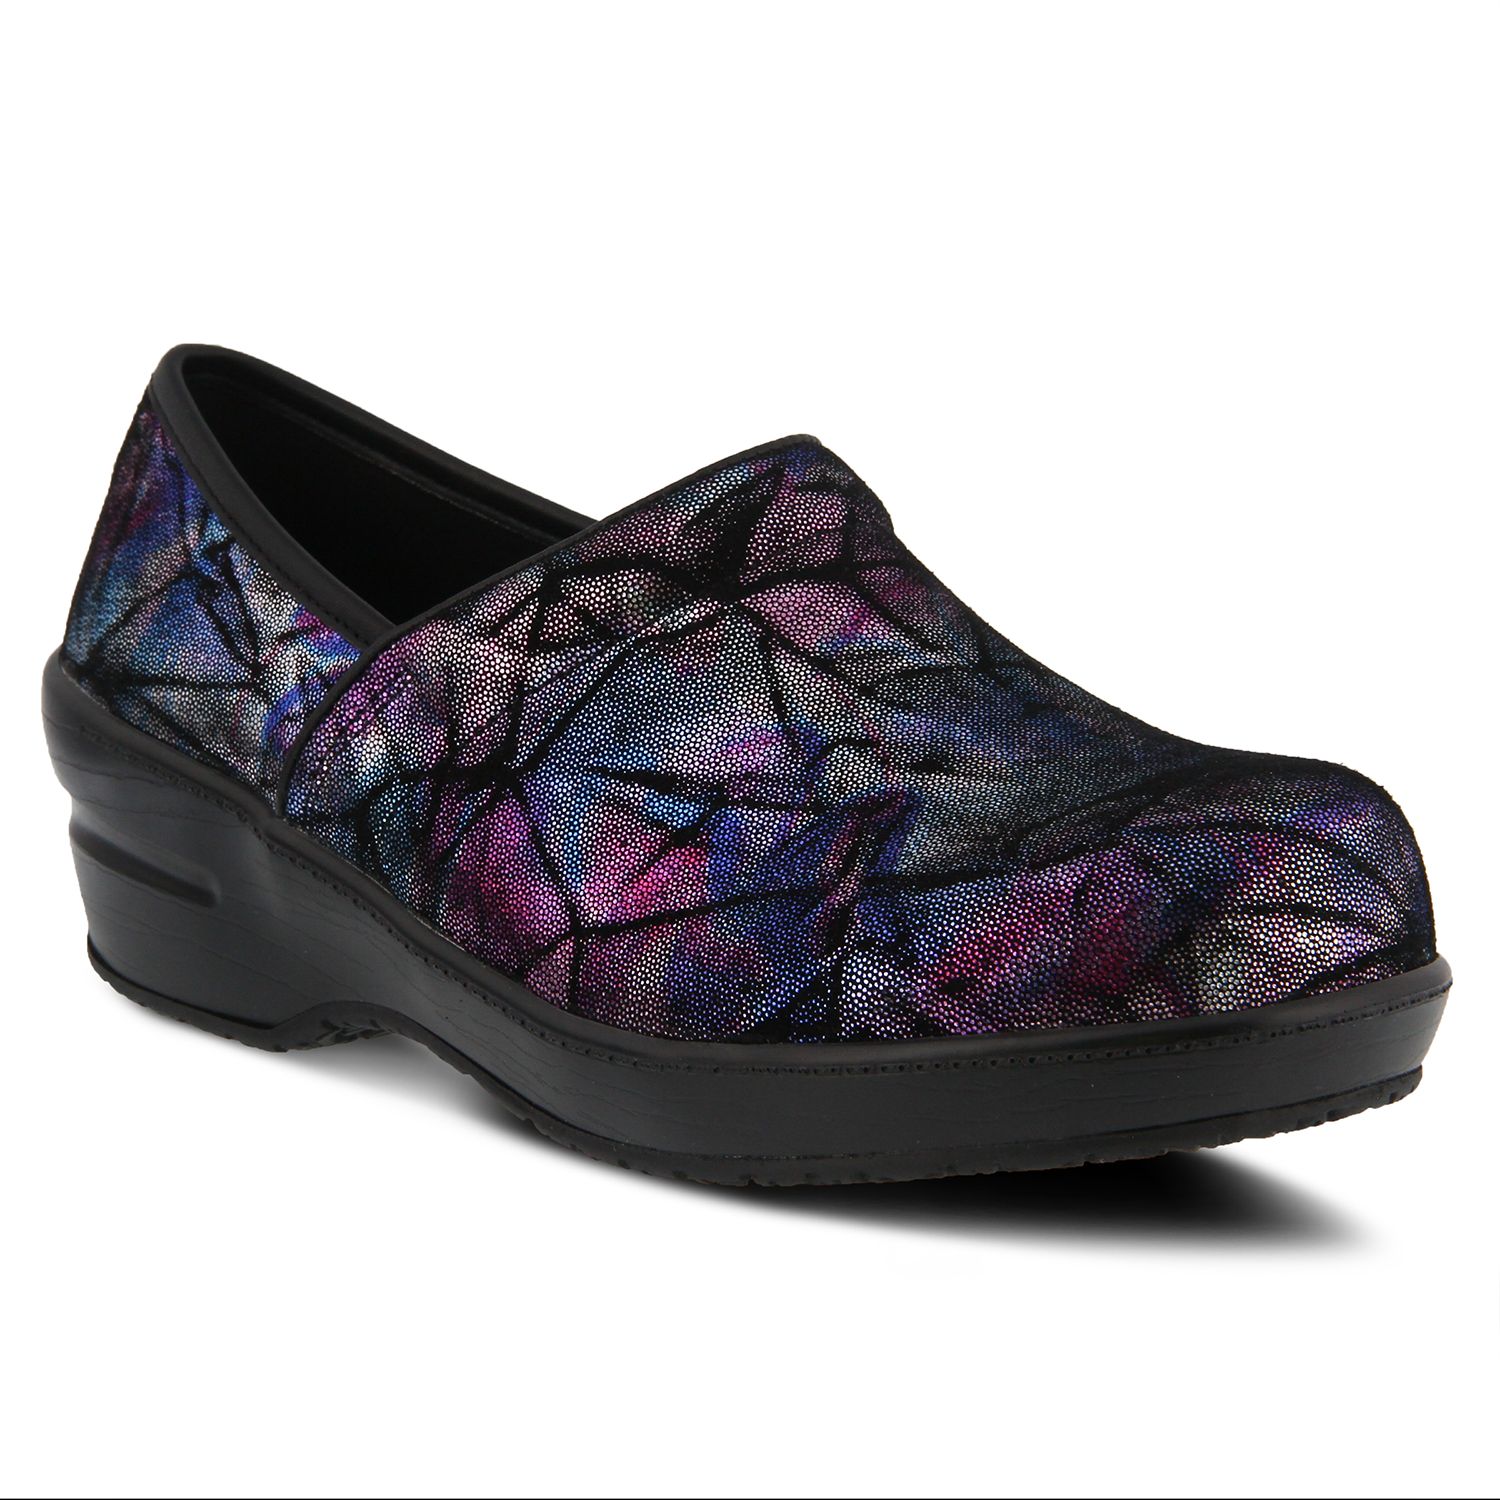 vionic sandals amazon prime